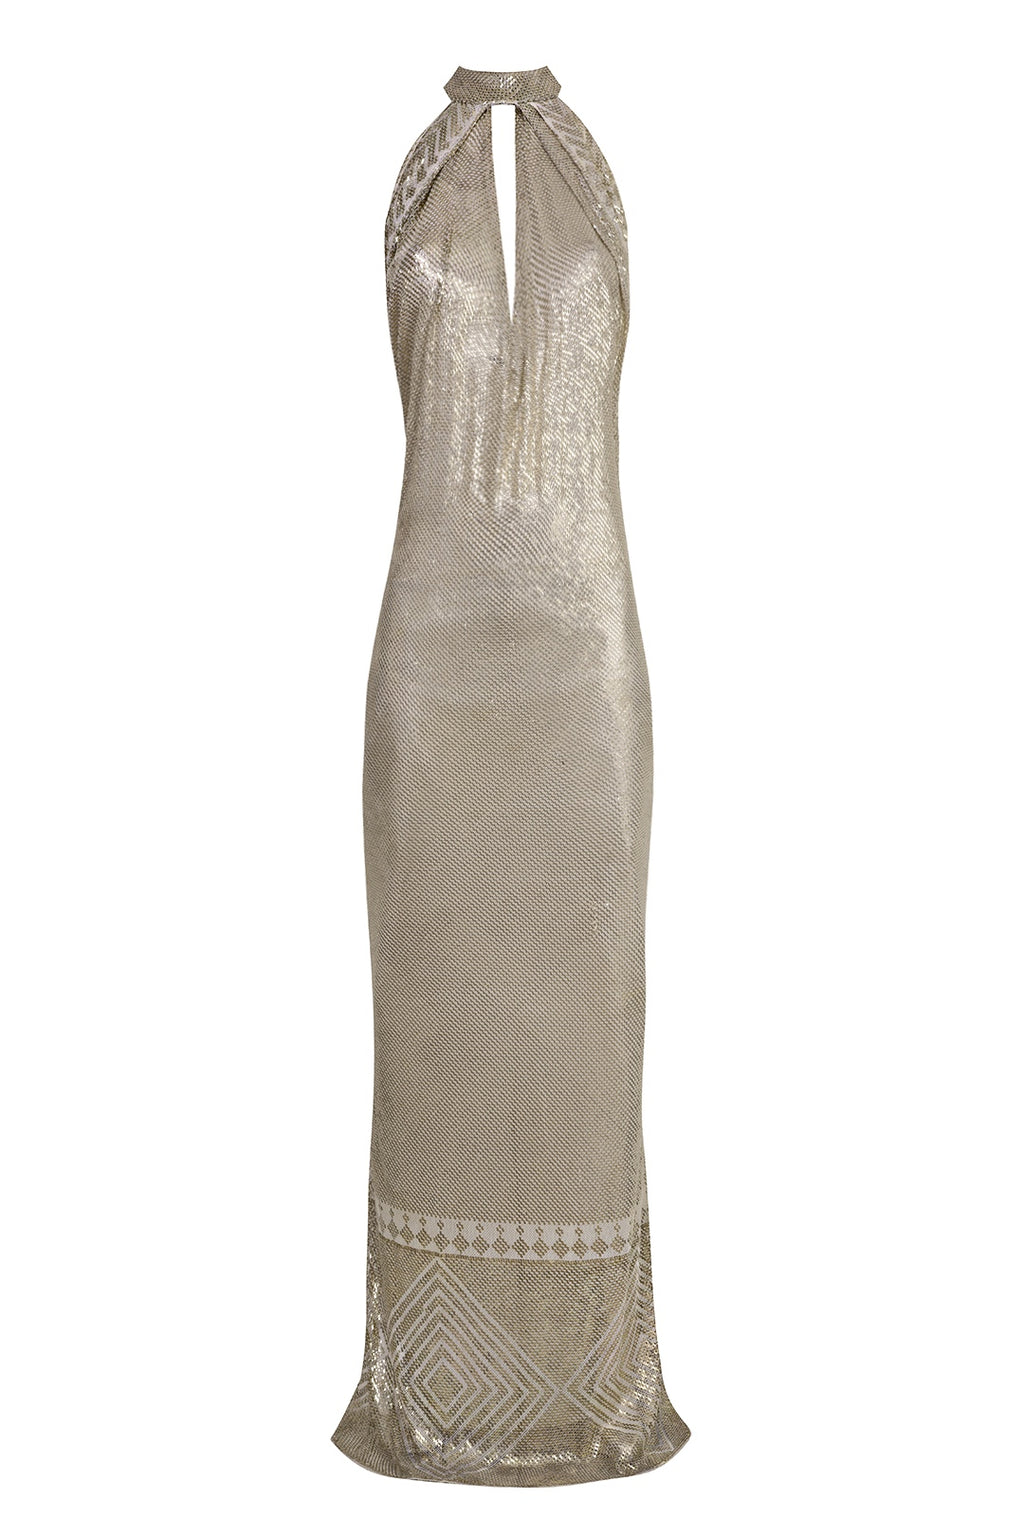 1920's Egyptian White Dress